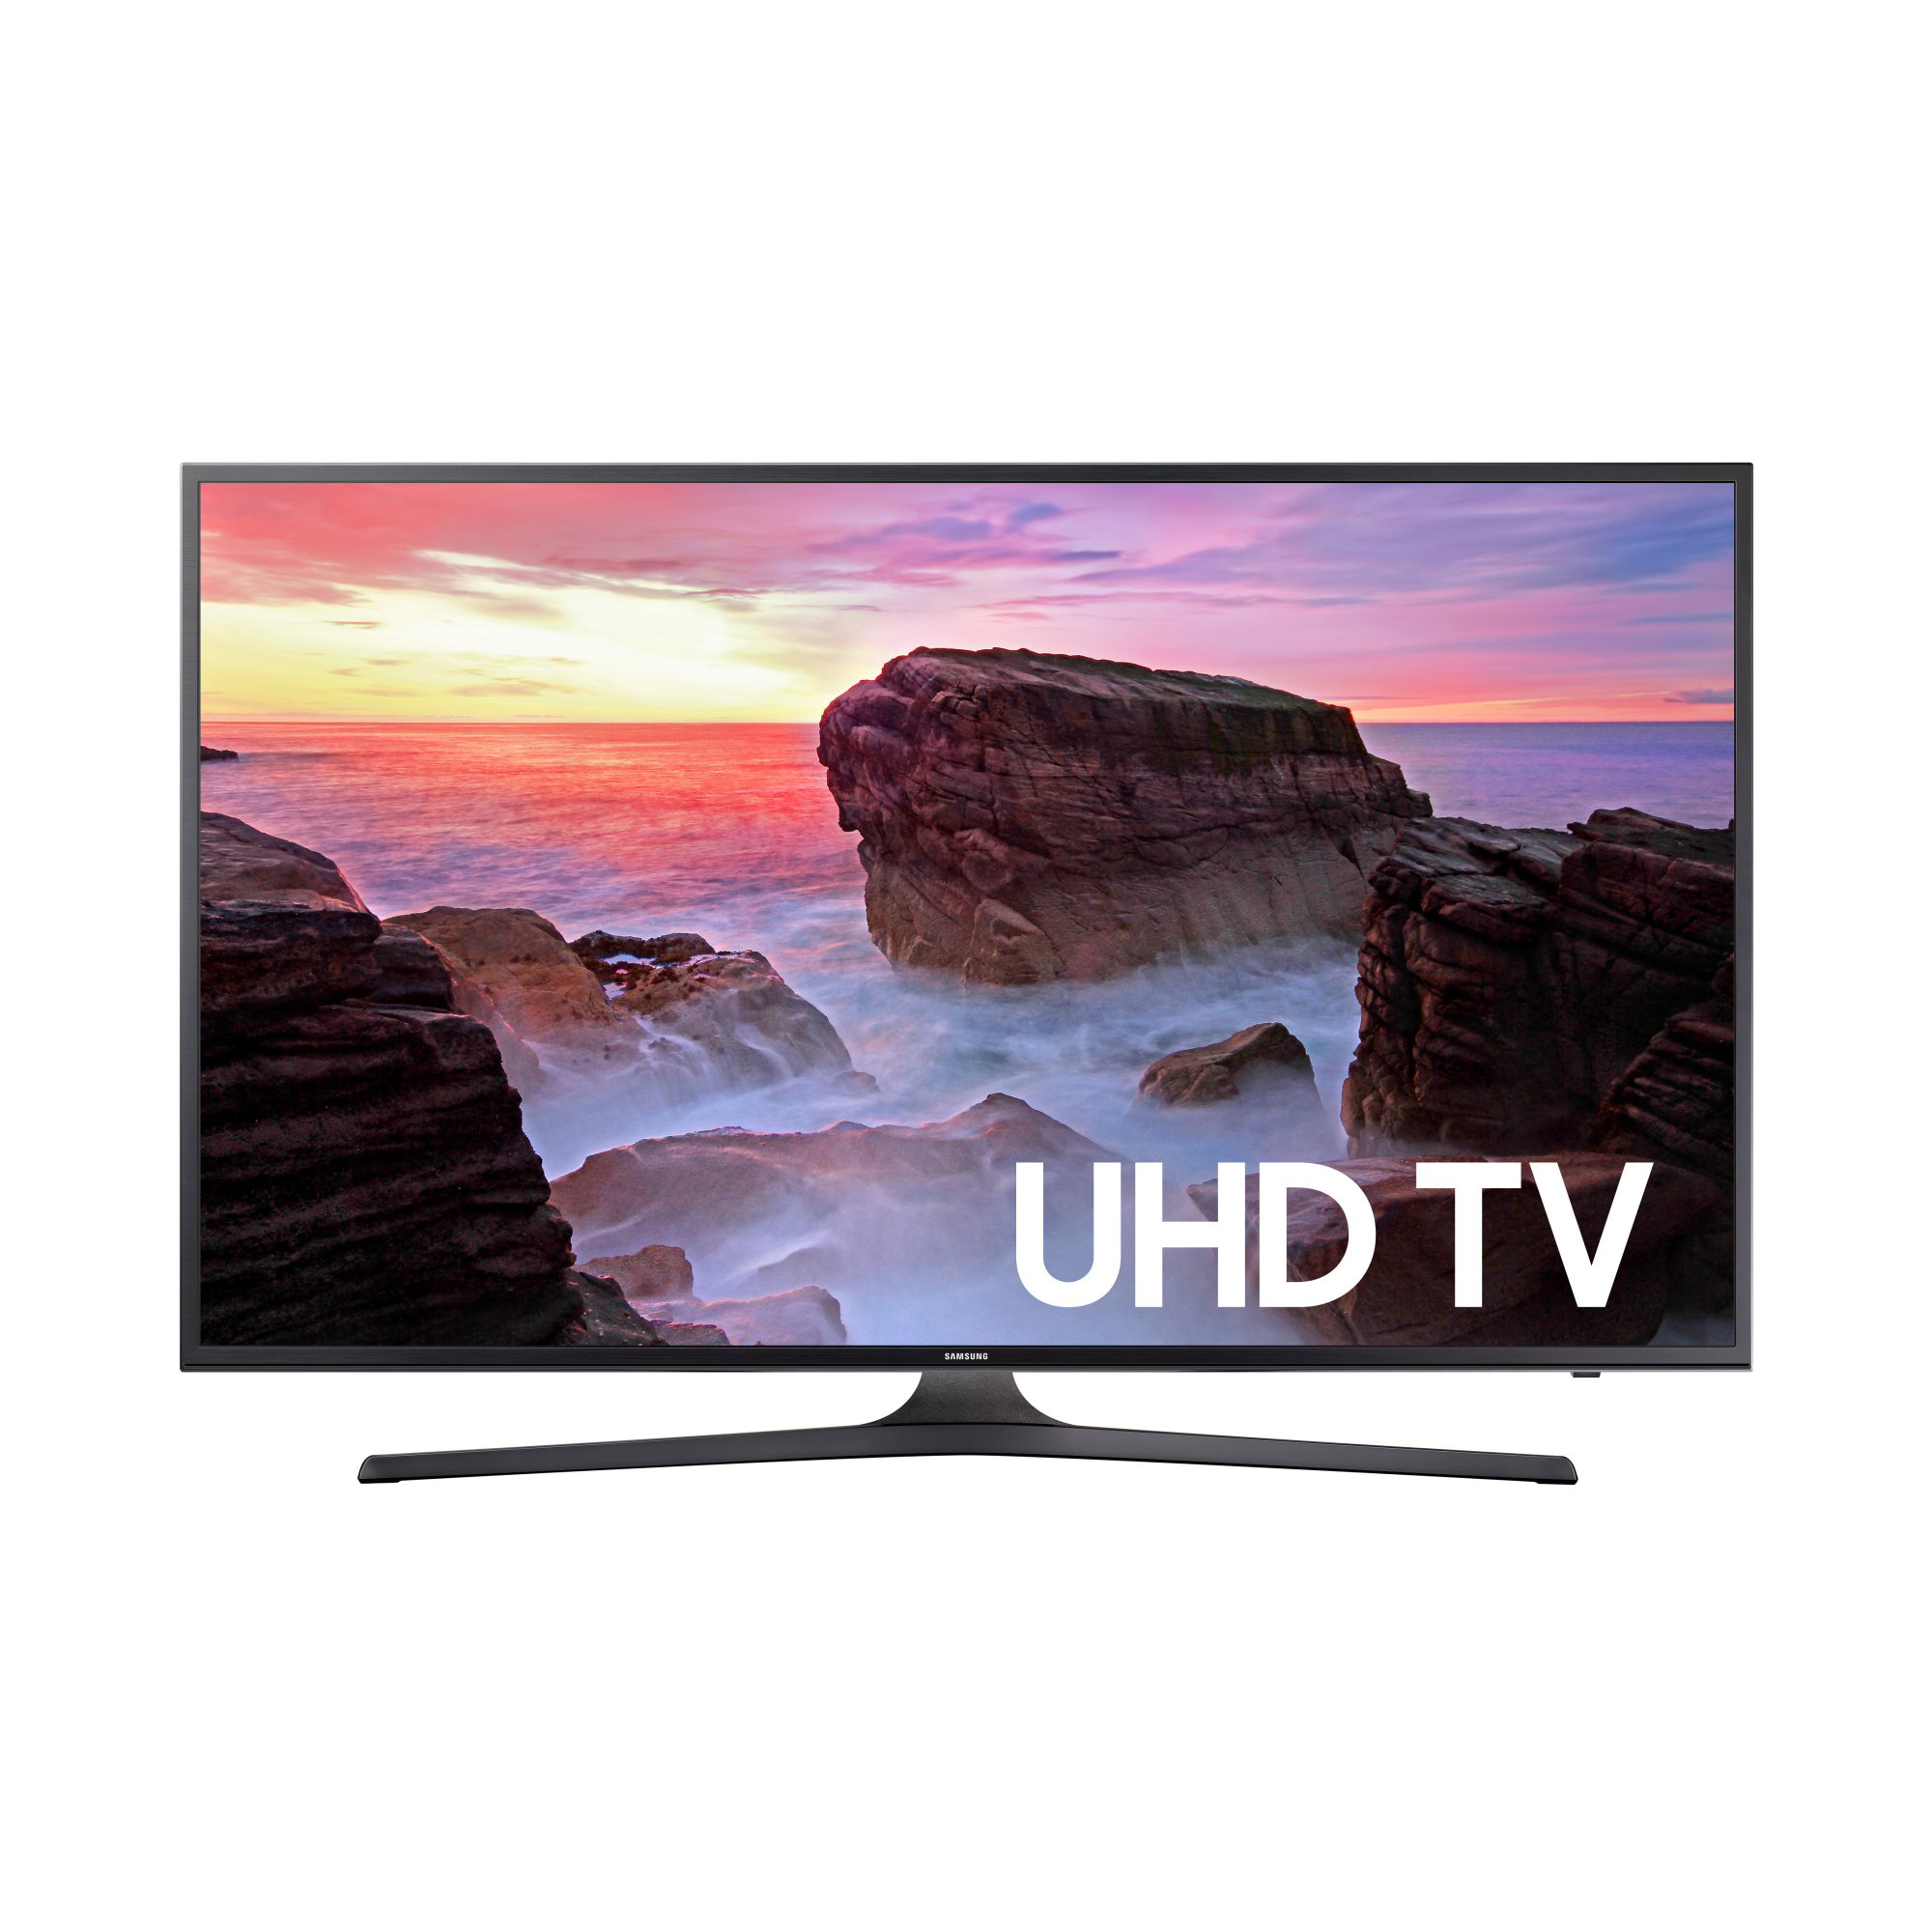 Restored SAMSUNG 58" Class 4K (2160P) Ultra HD Smart LED TV (UN58MU6070) (Refurbished) - image 1 of 11